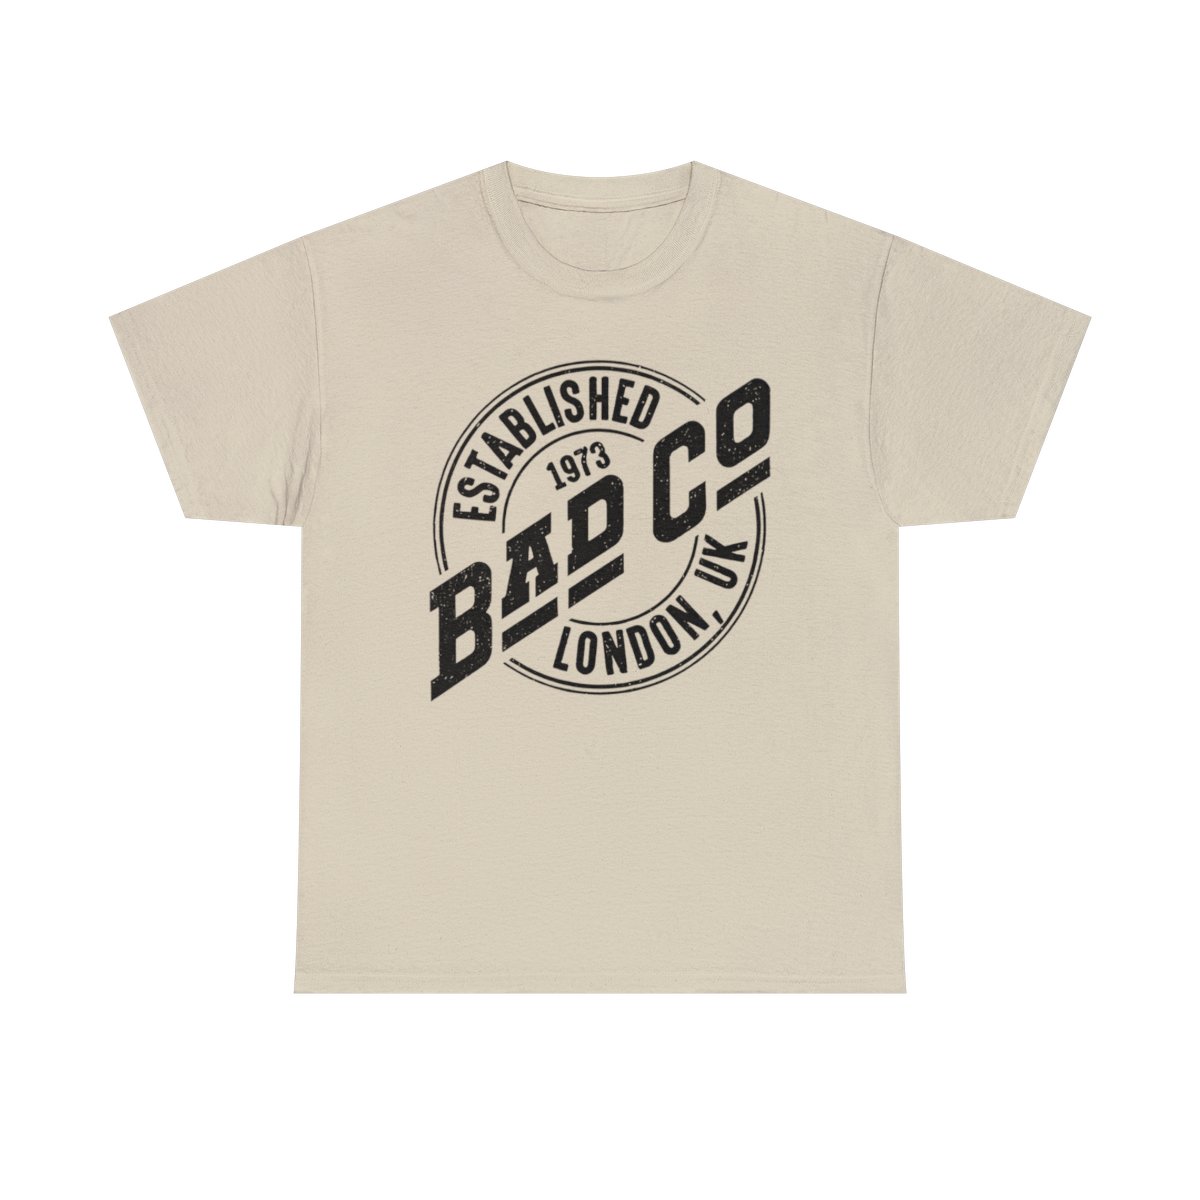 Bad Company Established in London Shirt 1973 UK Heart Rock Band T-Shirt Unisex Heavy Cotton Tee